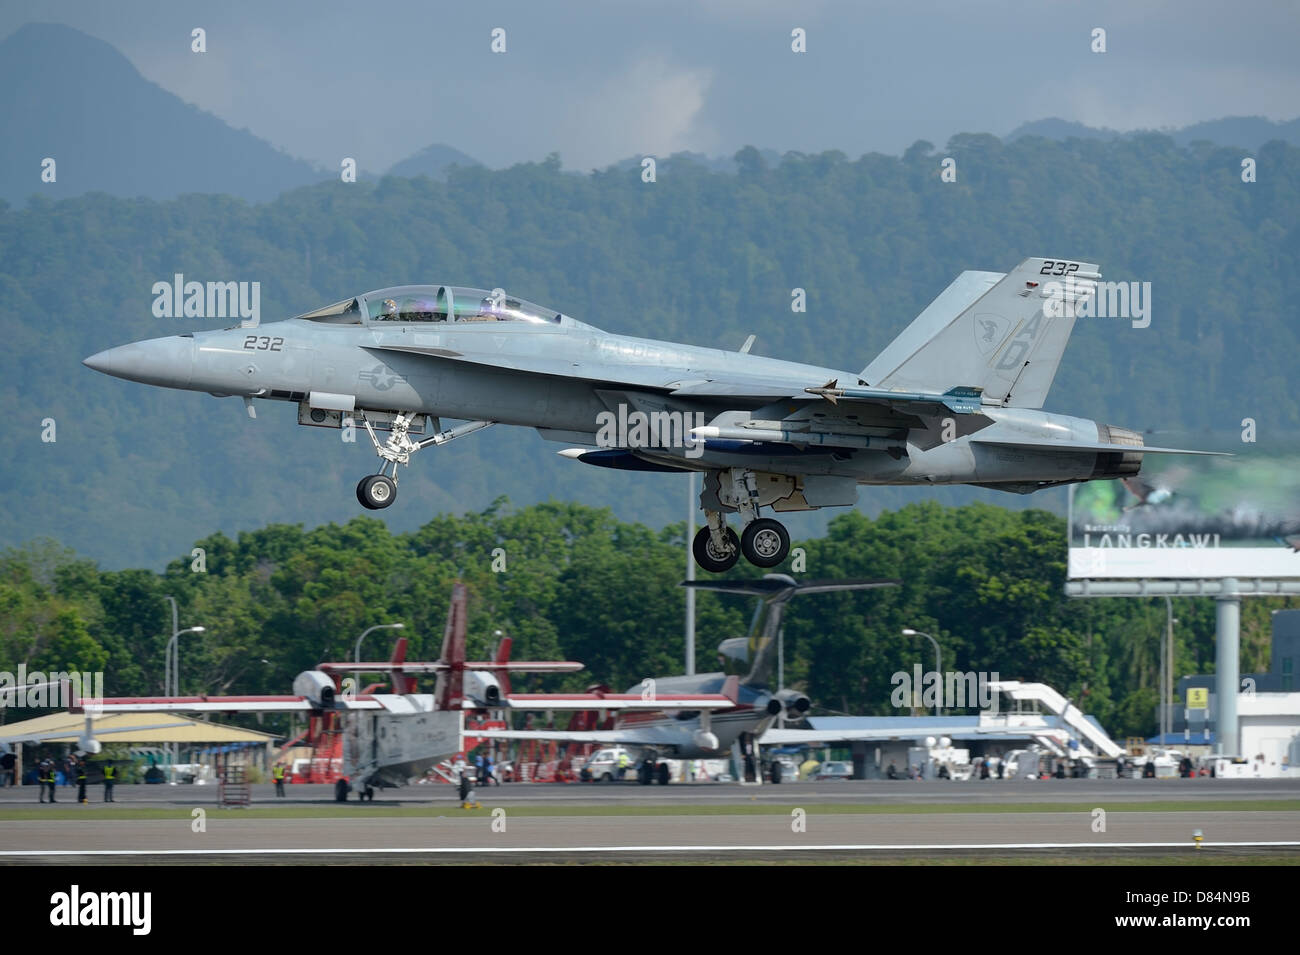 Marzo 26, 2013 - Un F/A-18 Super Hornet de la Marina estadounidense despegar del aeropuerto de Langkawi, Malasia. Foto de stock